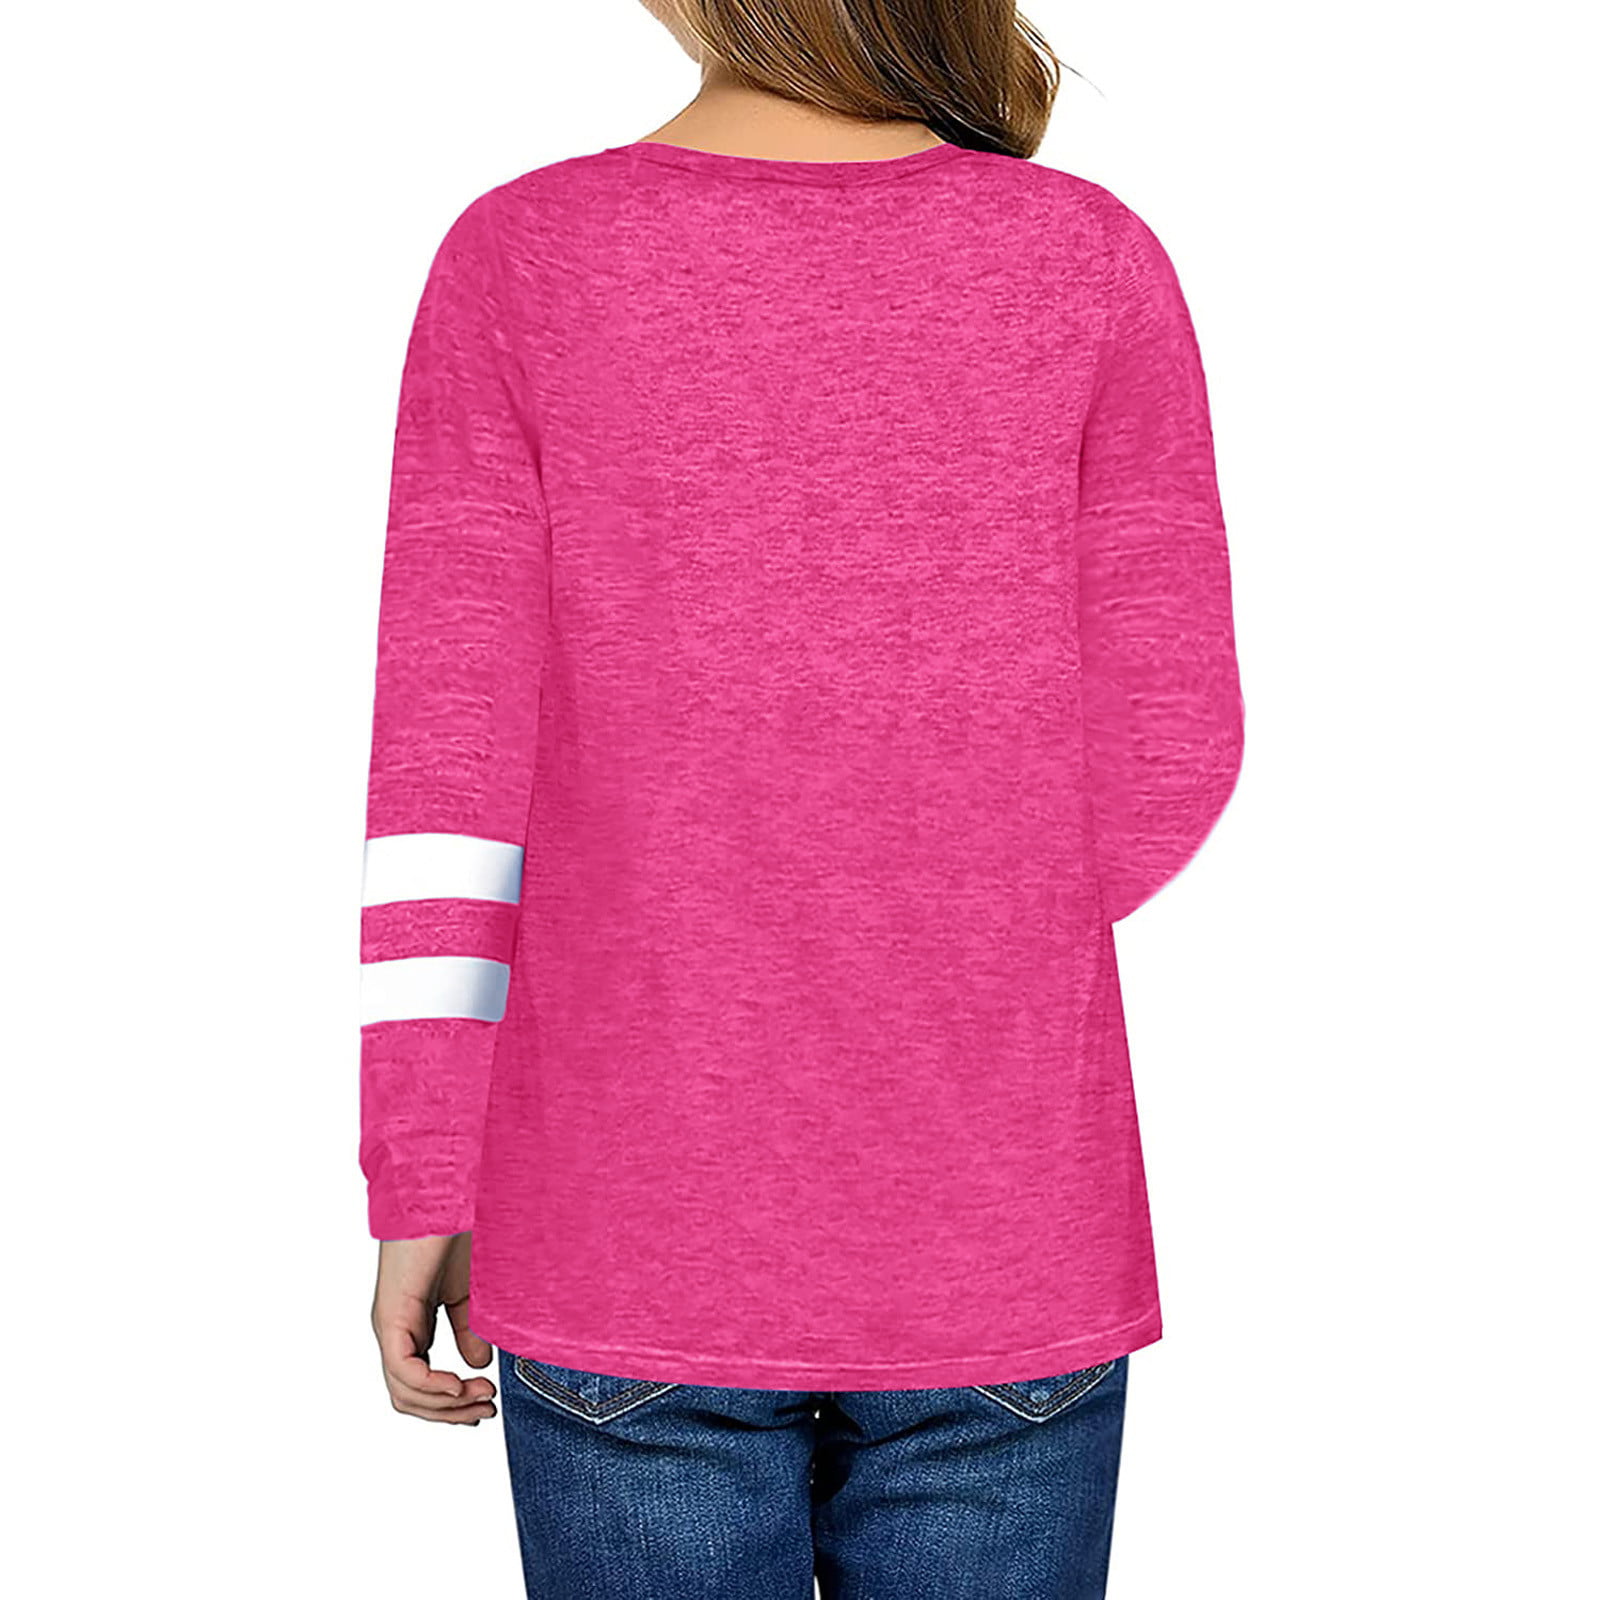  Hotkey Girls Sweatshirts Kids Crewneck Long Sleeve Tops 4-15  Years Teen Girl's Shirts Cute Trendy Tie Dye Casual Outfits: Clothing,  Shoes & Jewelry